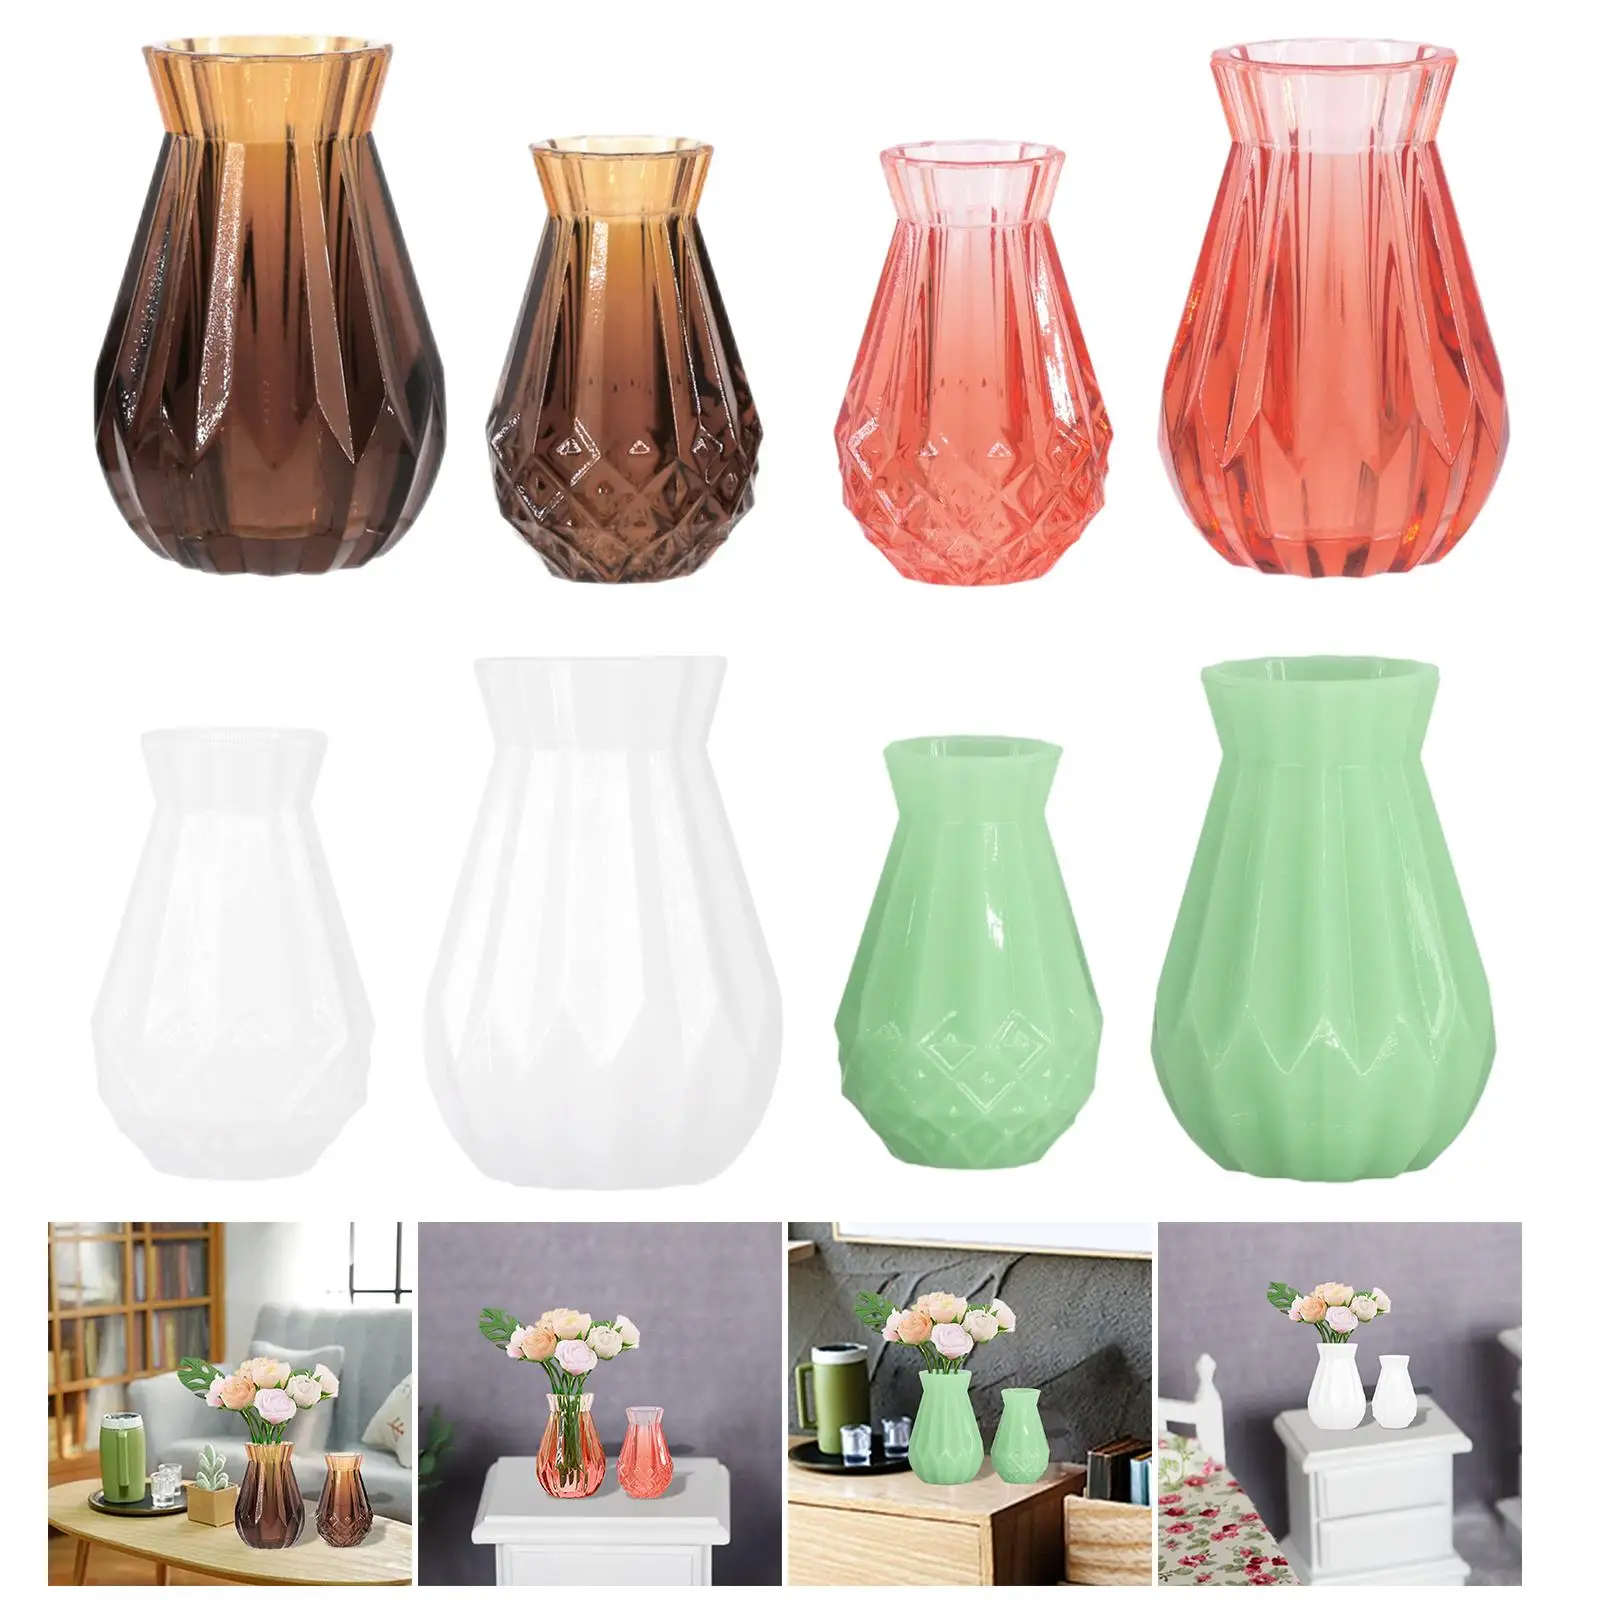 Dollhouse Vase Cute Floral Vase Model Decor Accessories for Home Desktop